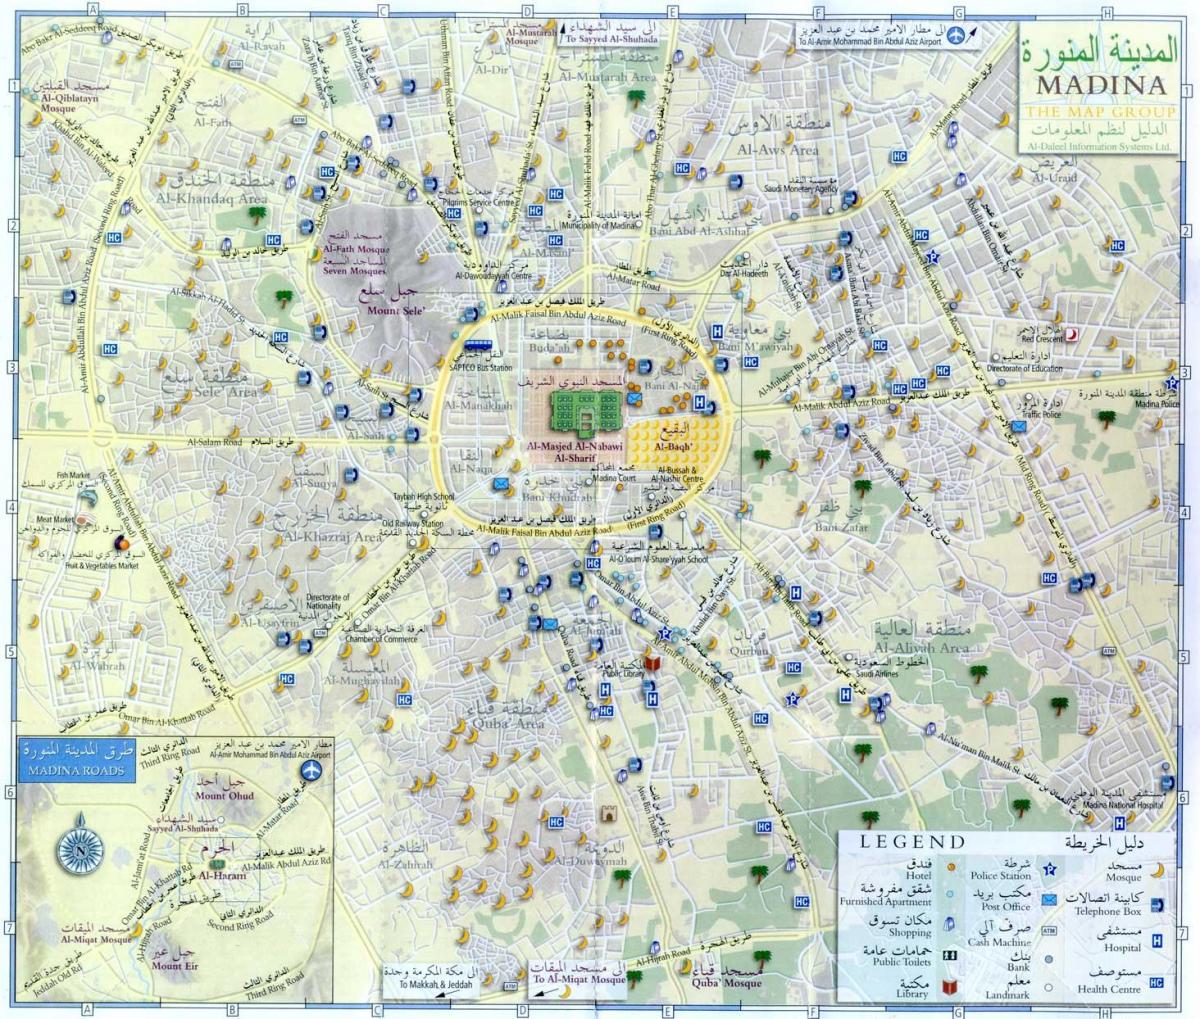 Plan des rues de Mecca (Makkah)